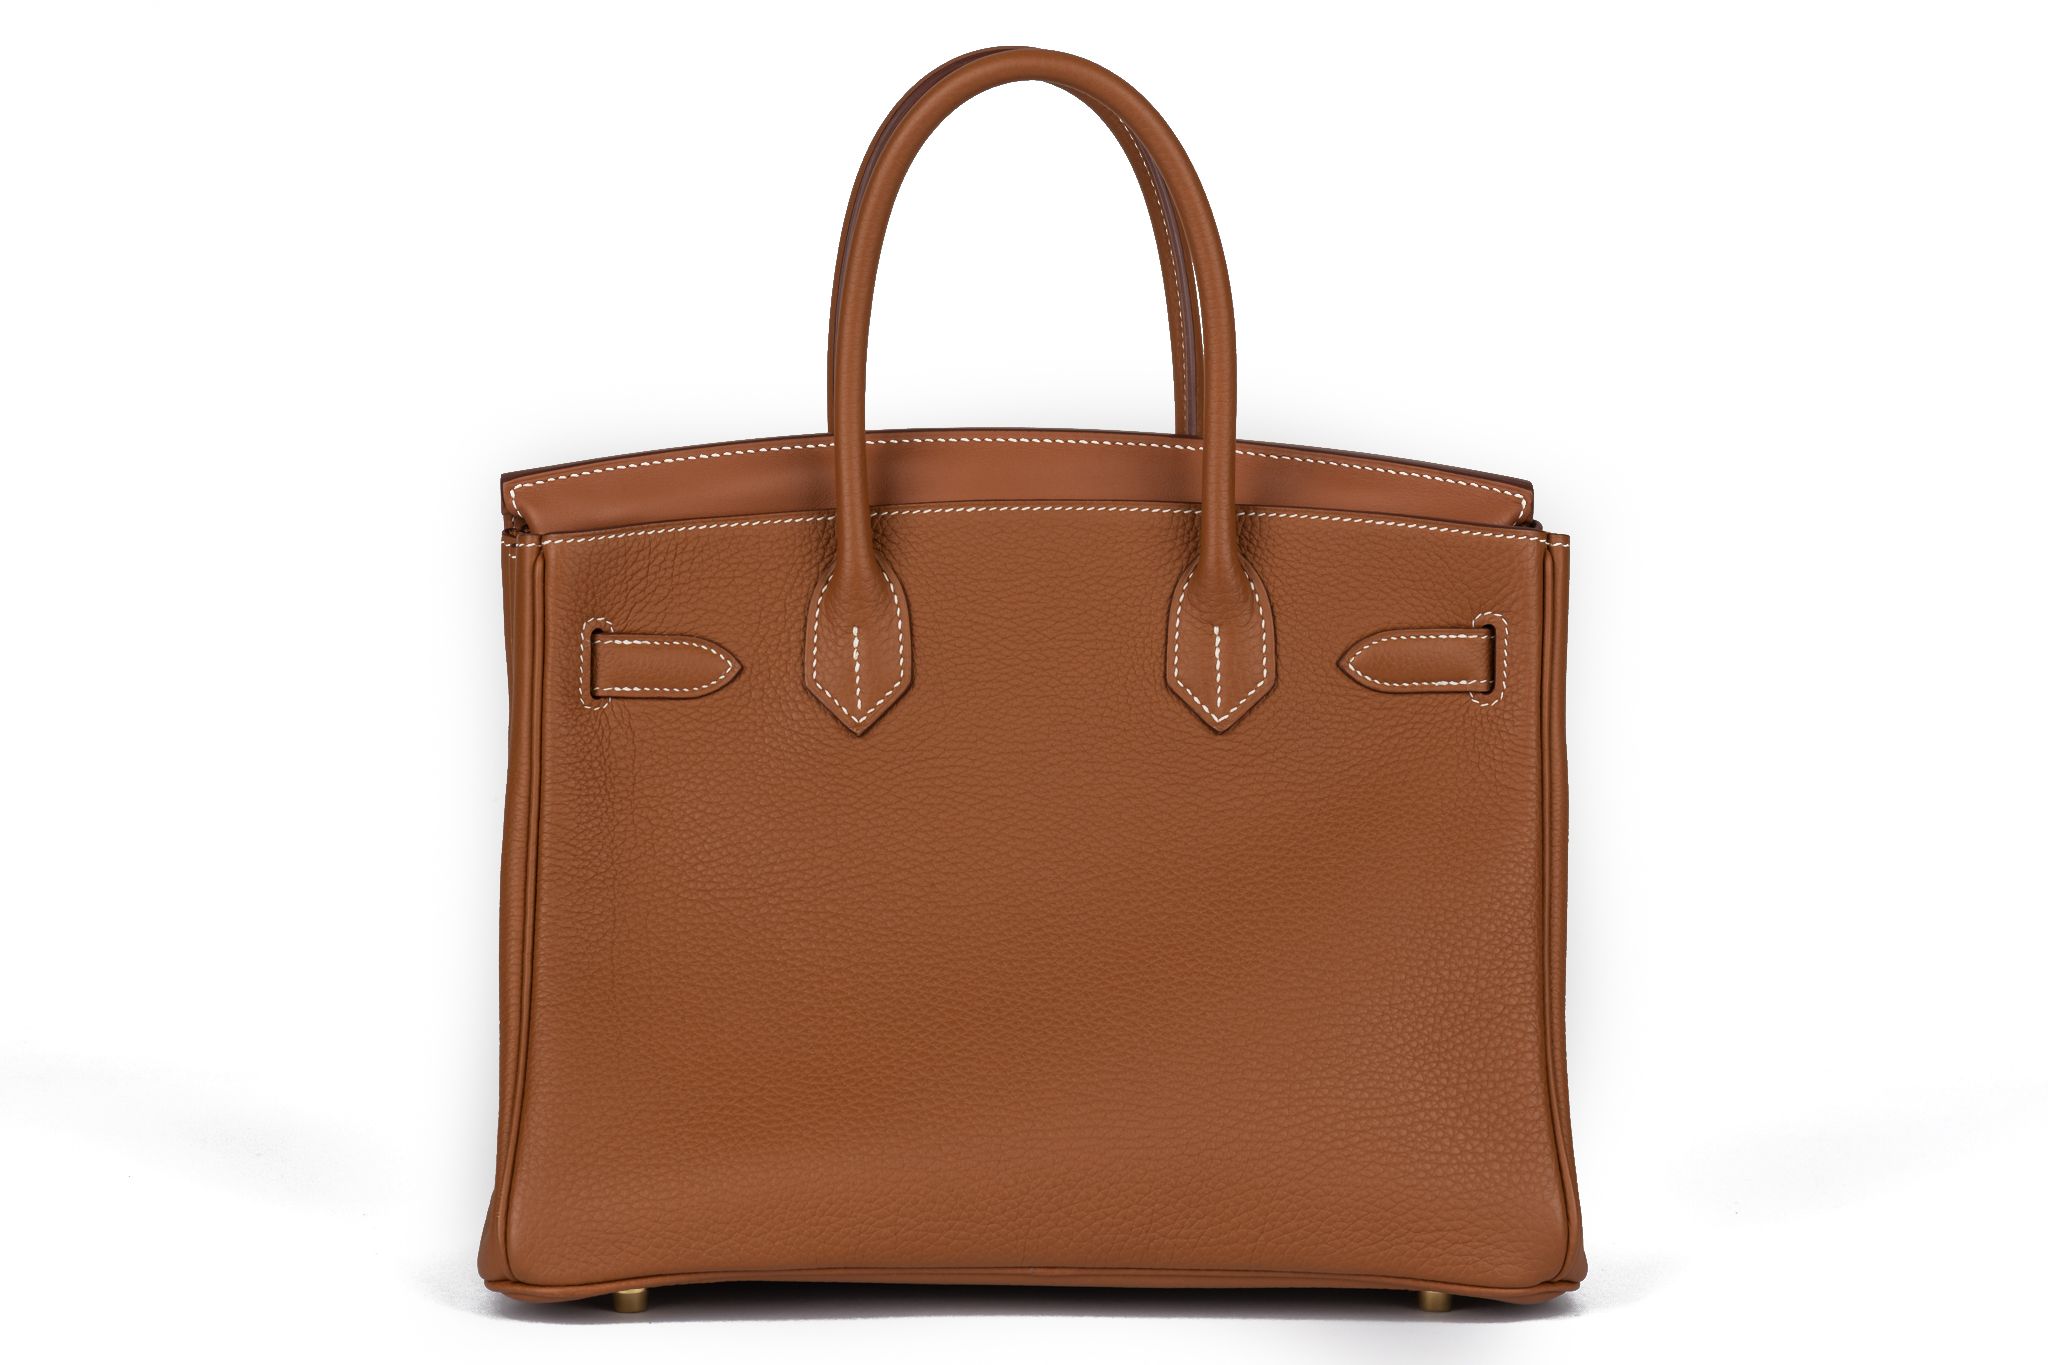 Hermès Birkin 3-in-1 Handbag